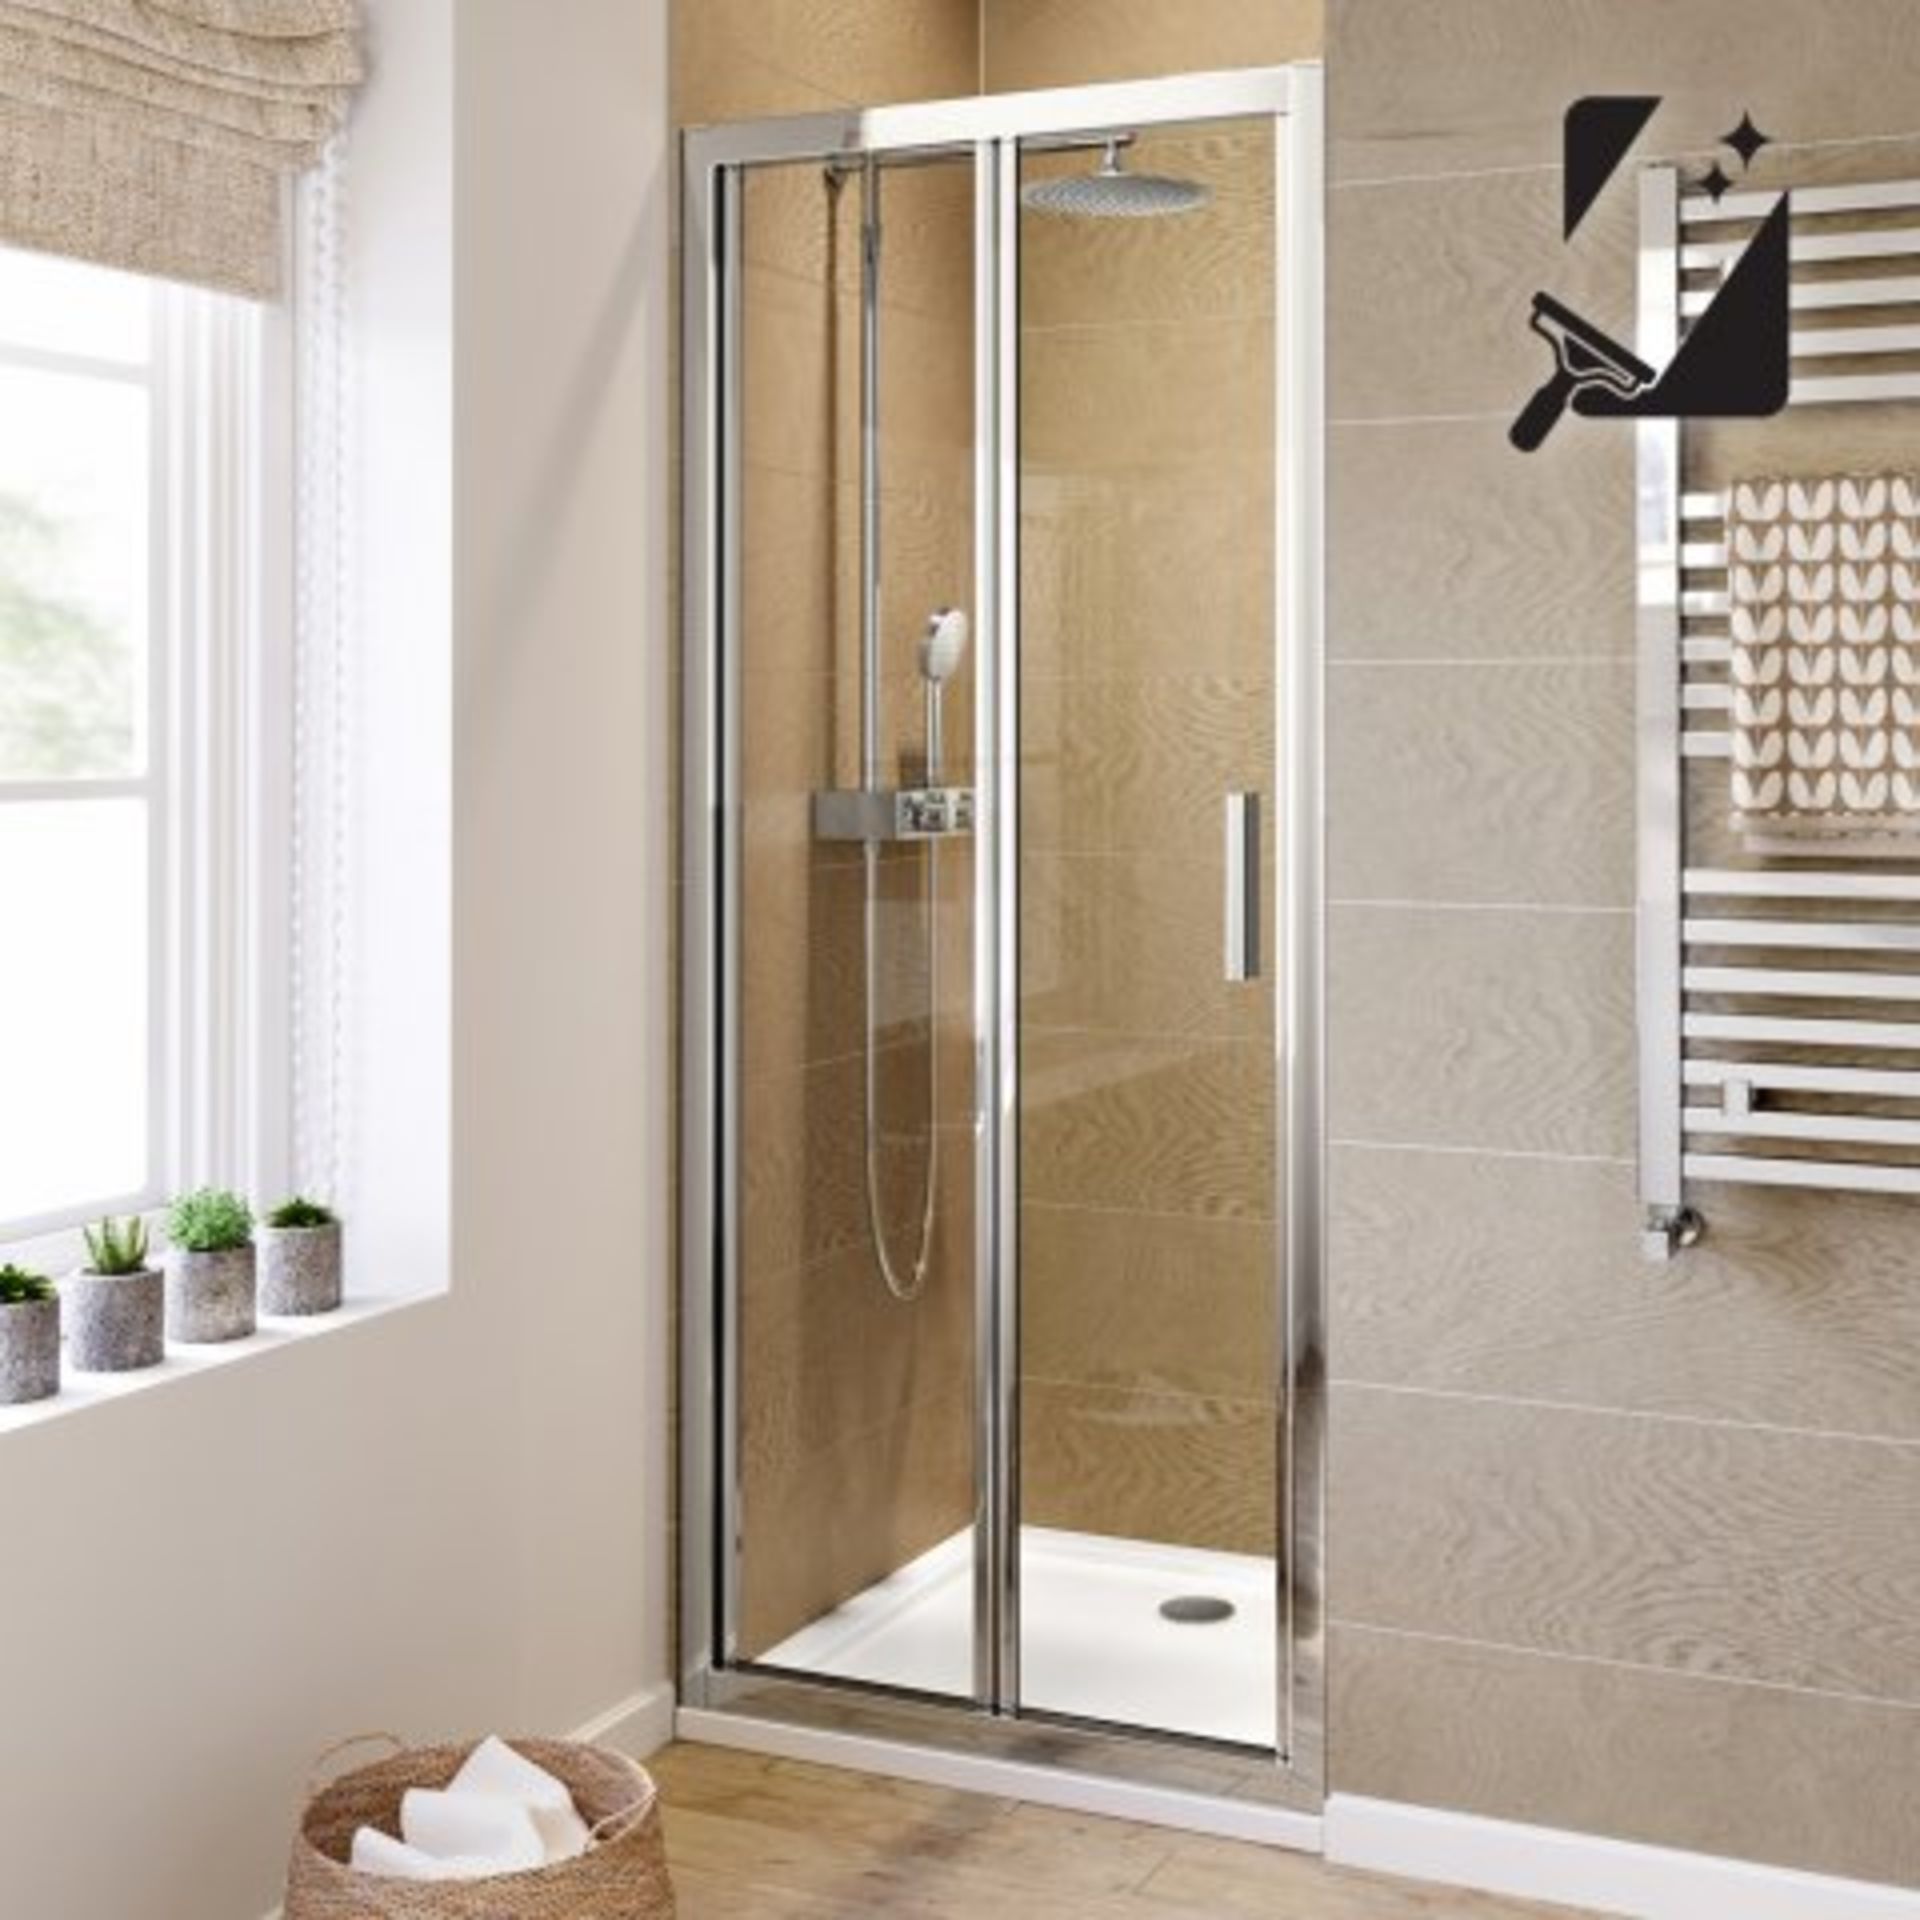 (N72) 900mm - 6mm - Elements EasyClean Bifold Shower Door. RRP £299.99. Essential Design Our